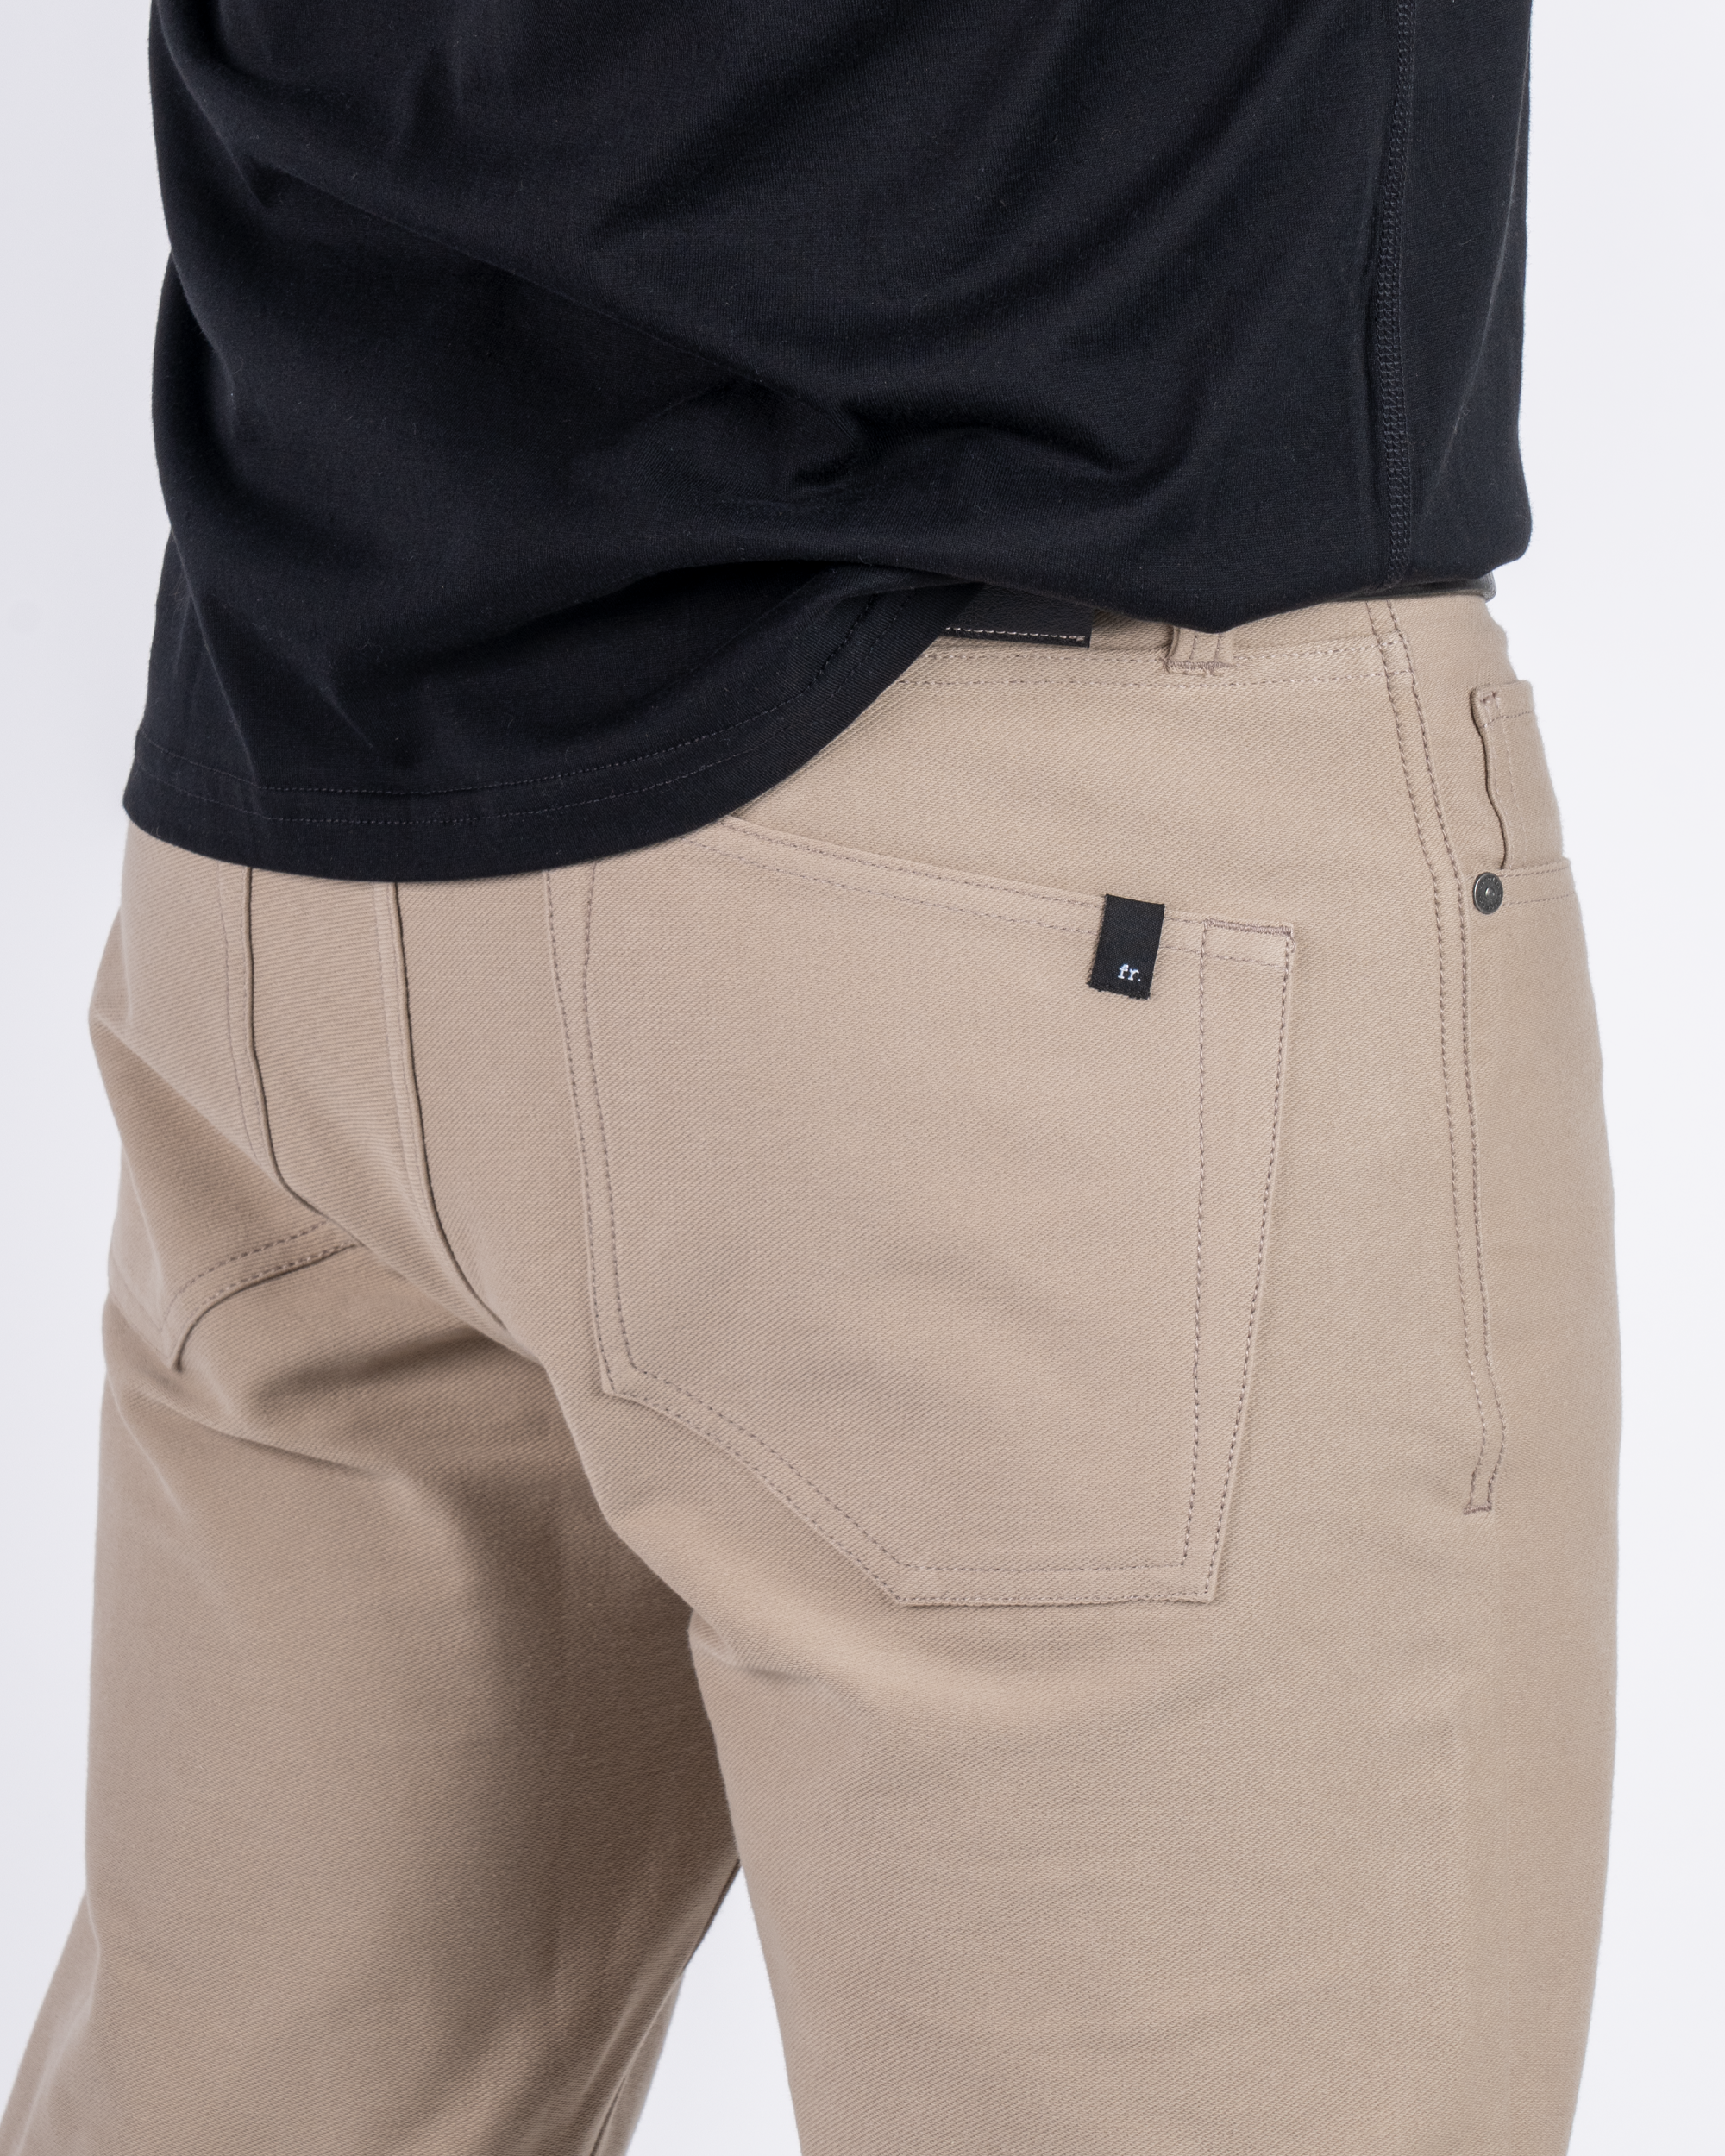 Foreign Rider Co Organic Cotton Tan 5 Pocket Pant Back Pocket Detail